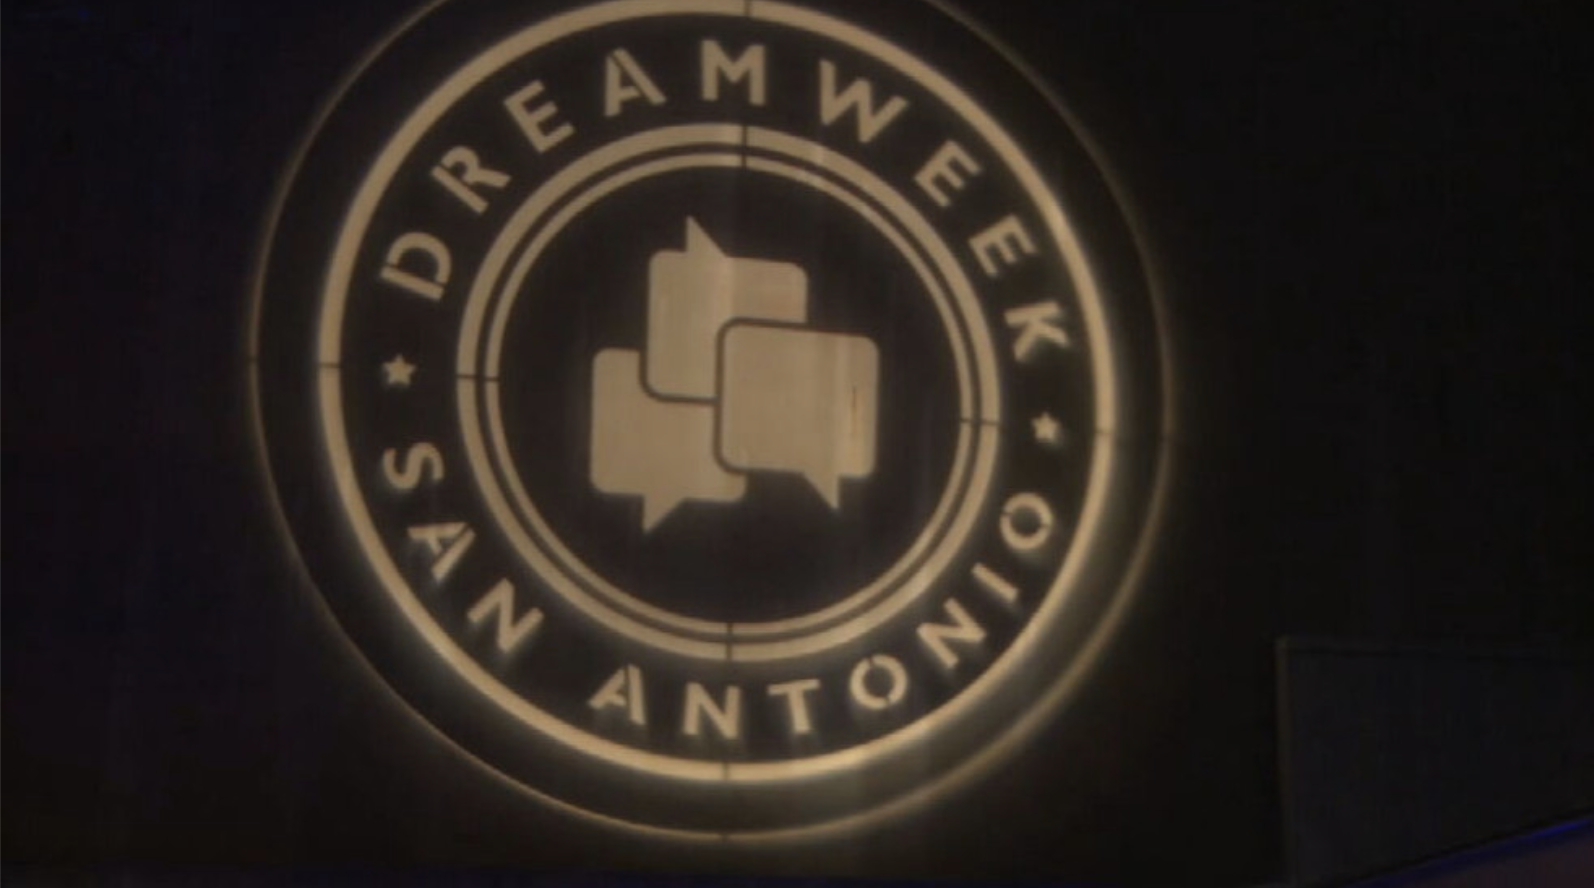 DreamWeek celebrating 11th anniversary in San Antonio